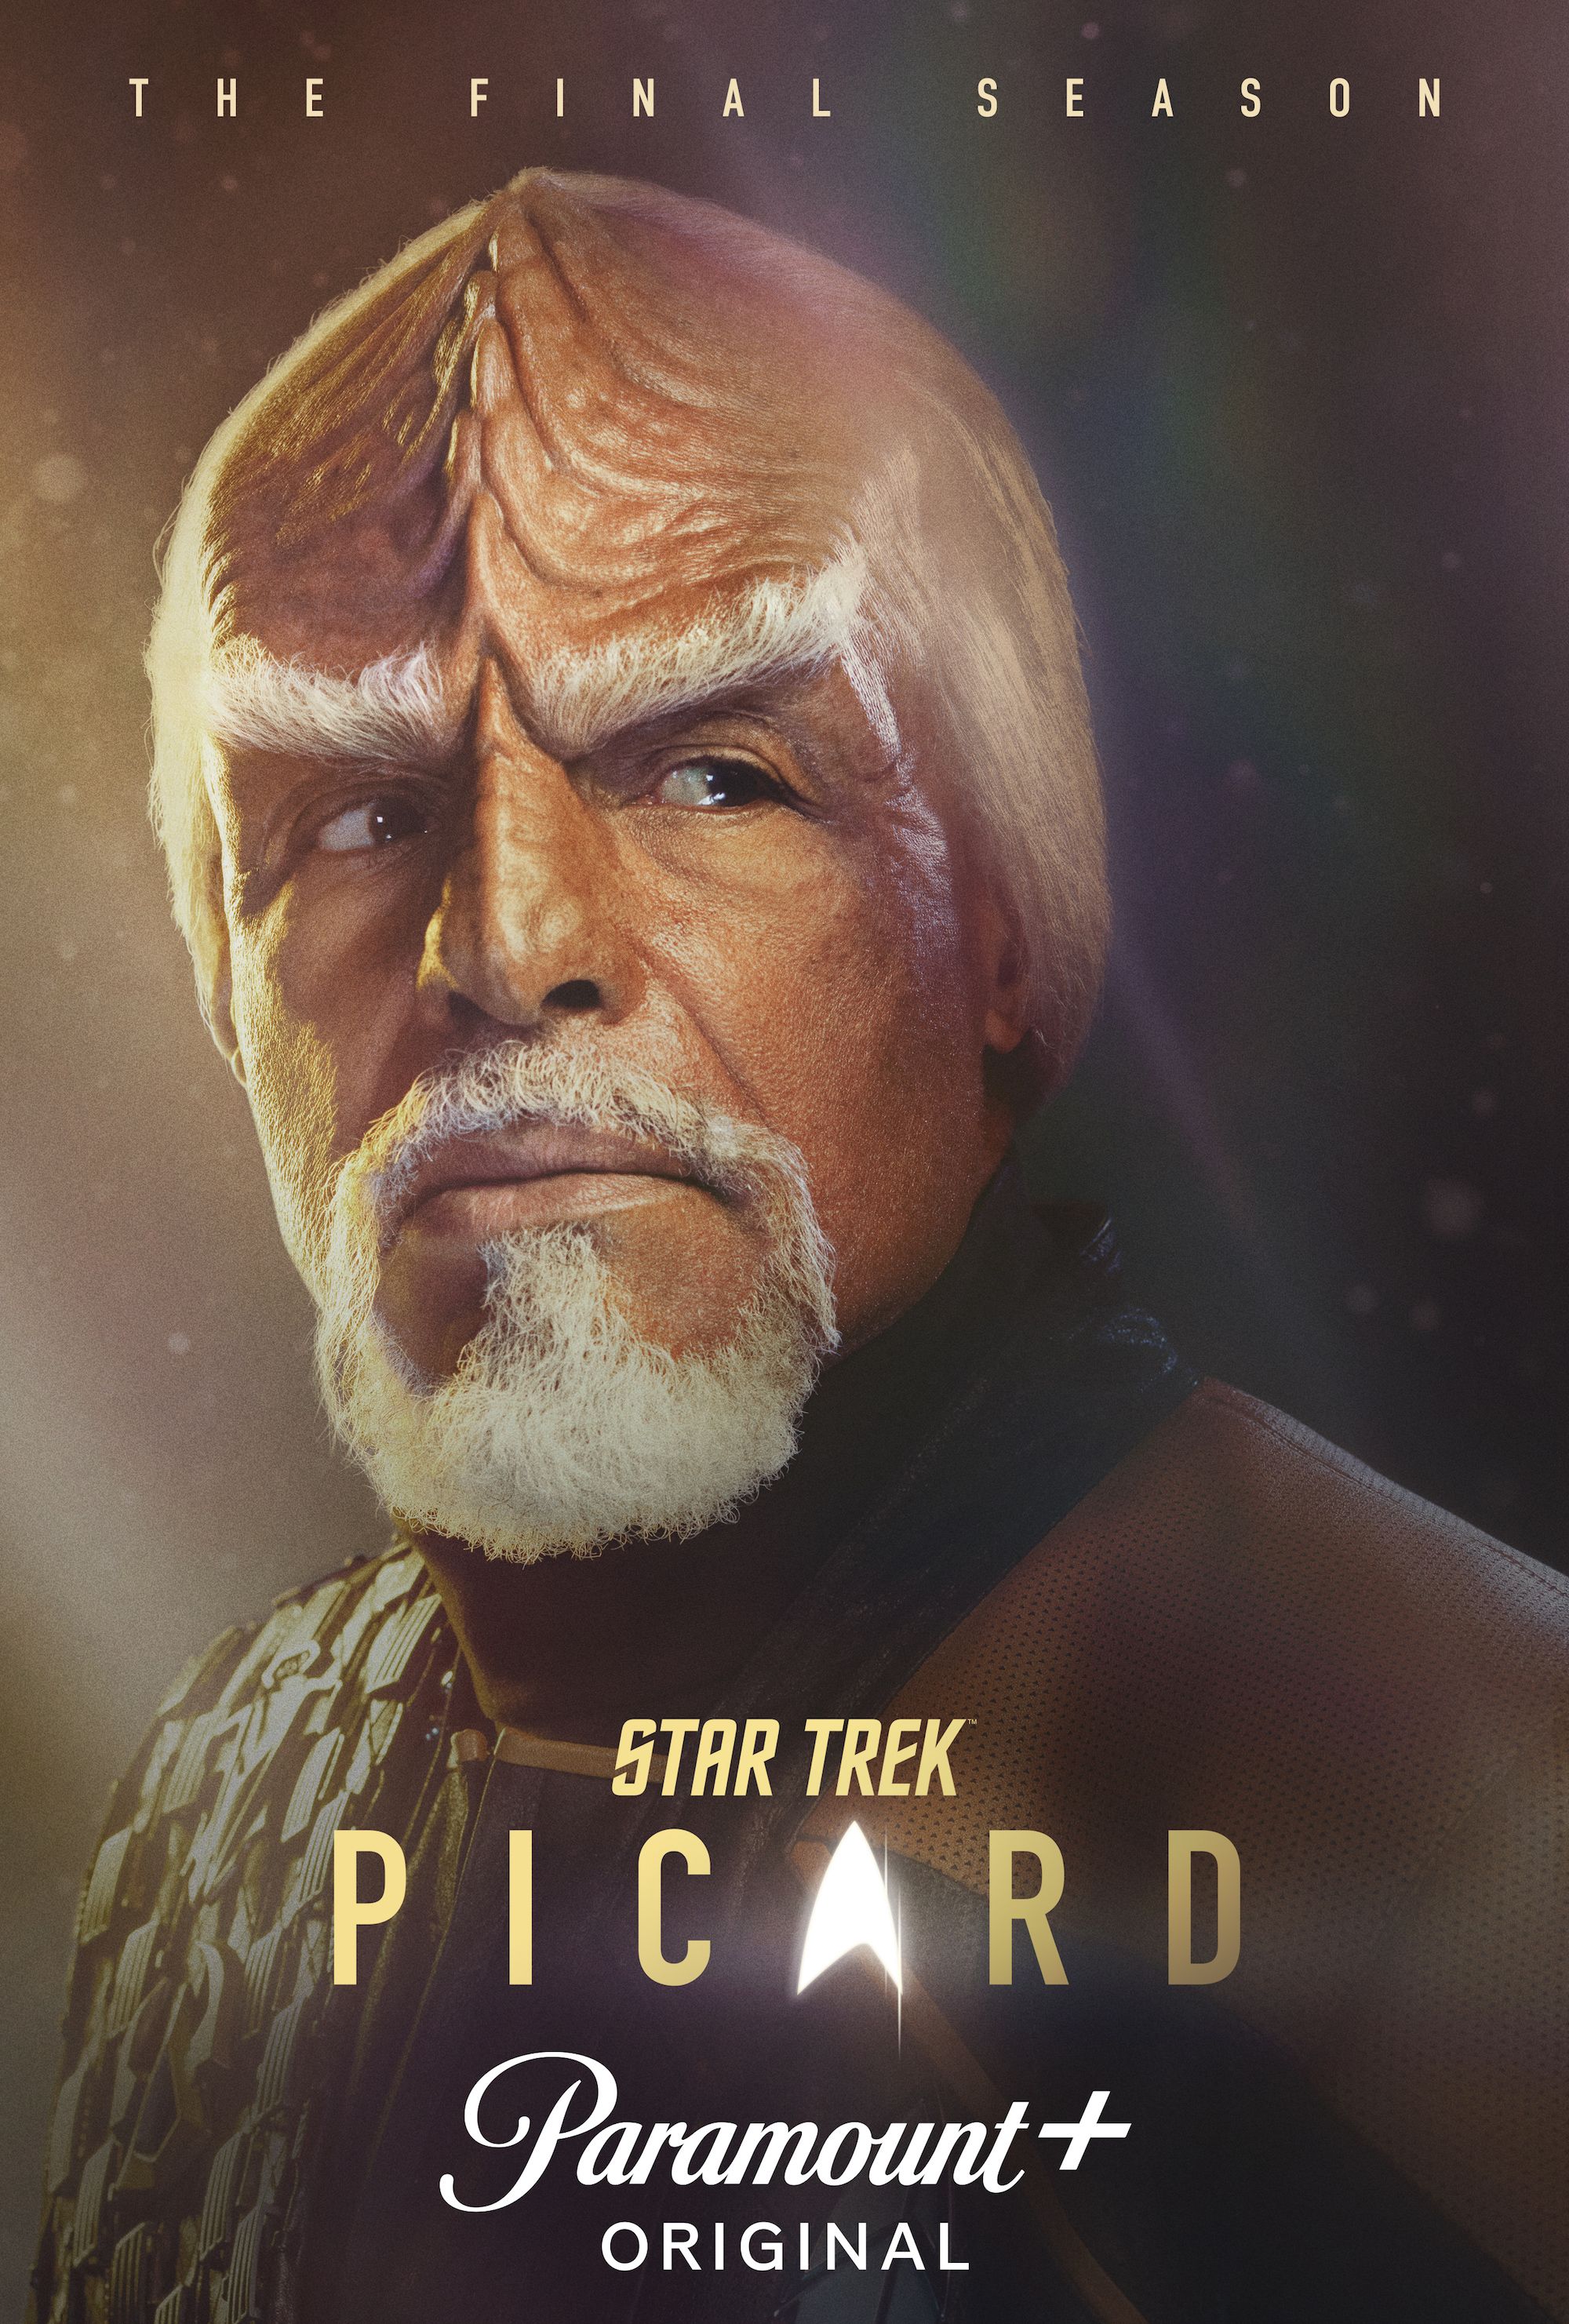 Michael Dorn as Worf in Star Trek Picard Season 3